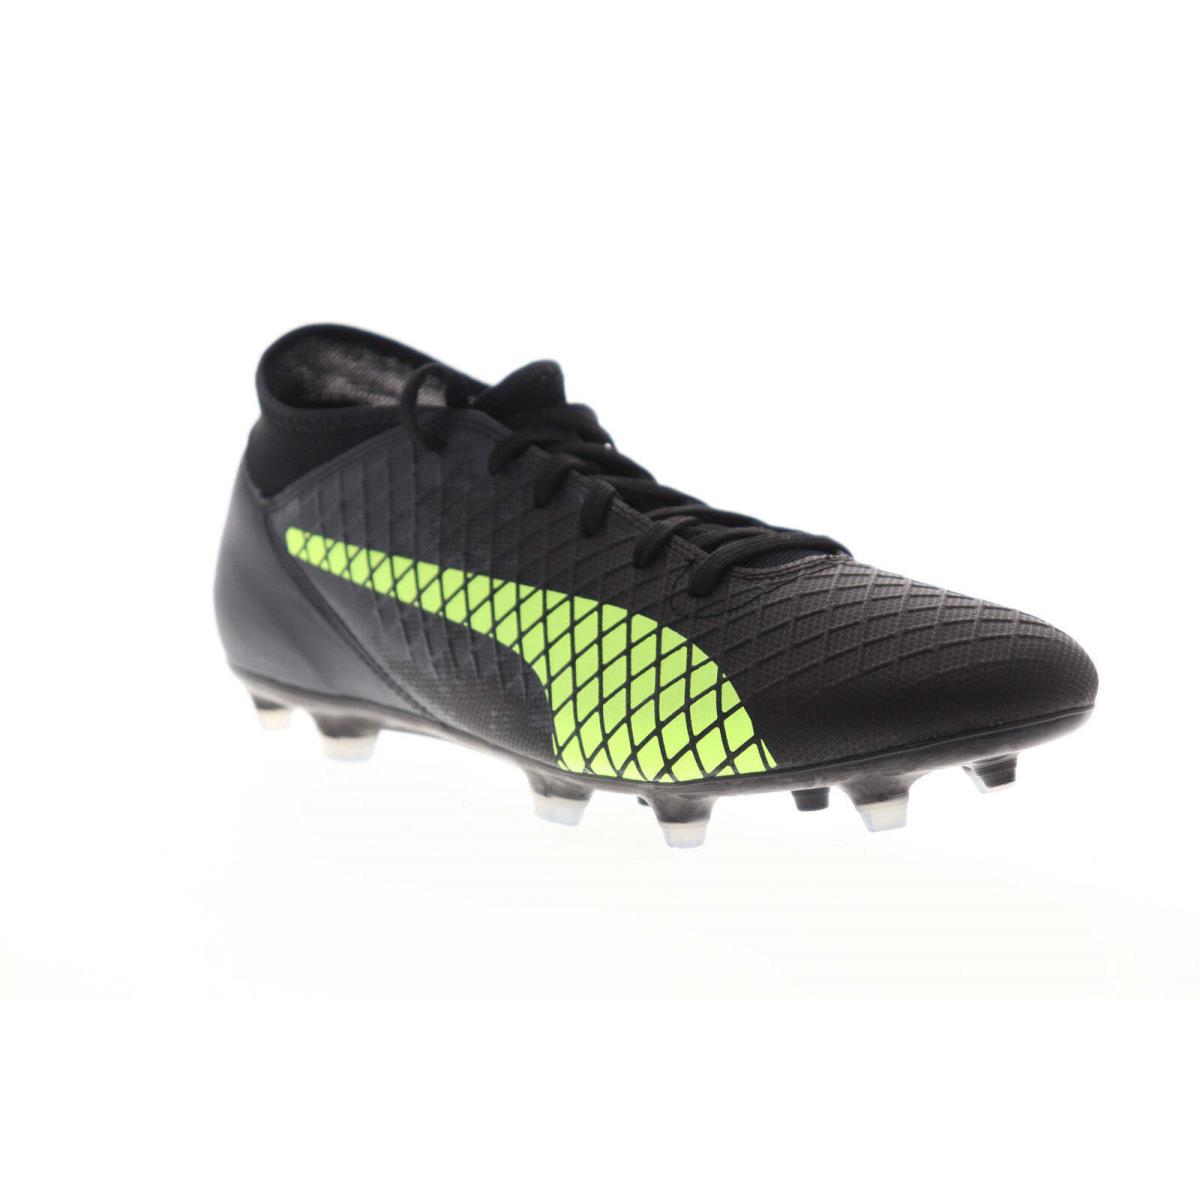 Puma Future 18.4 FG AG Mens Soccer Cleats Black Size 12.5 D Medium Athletic Shoe